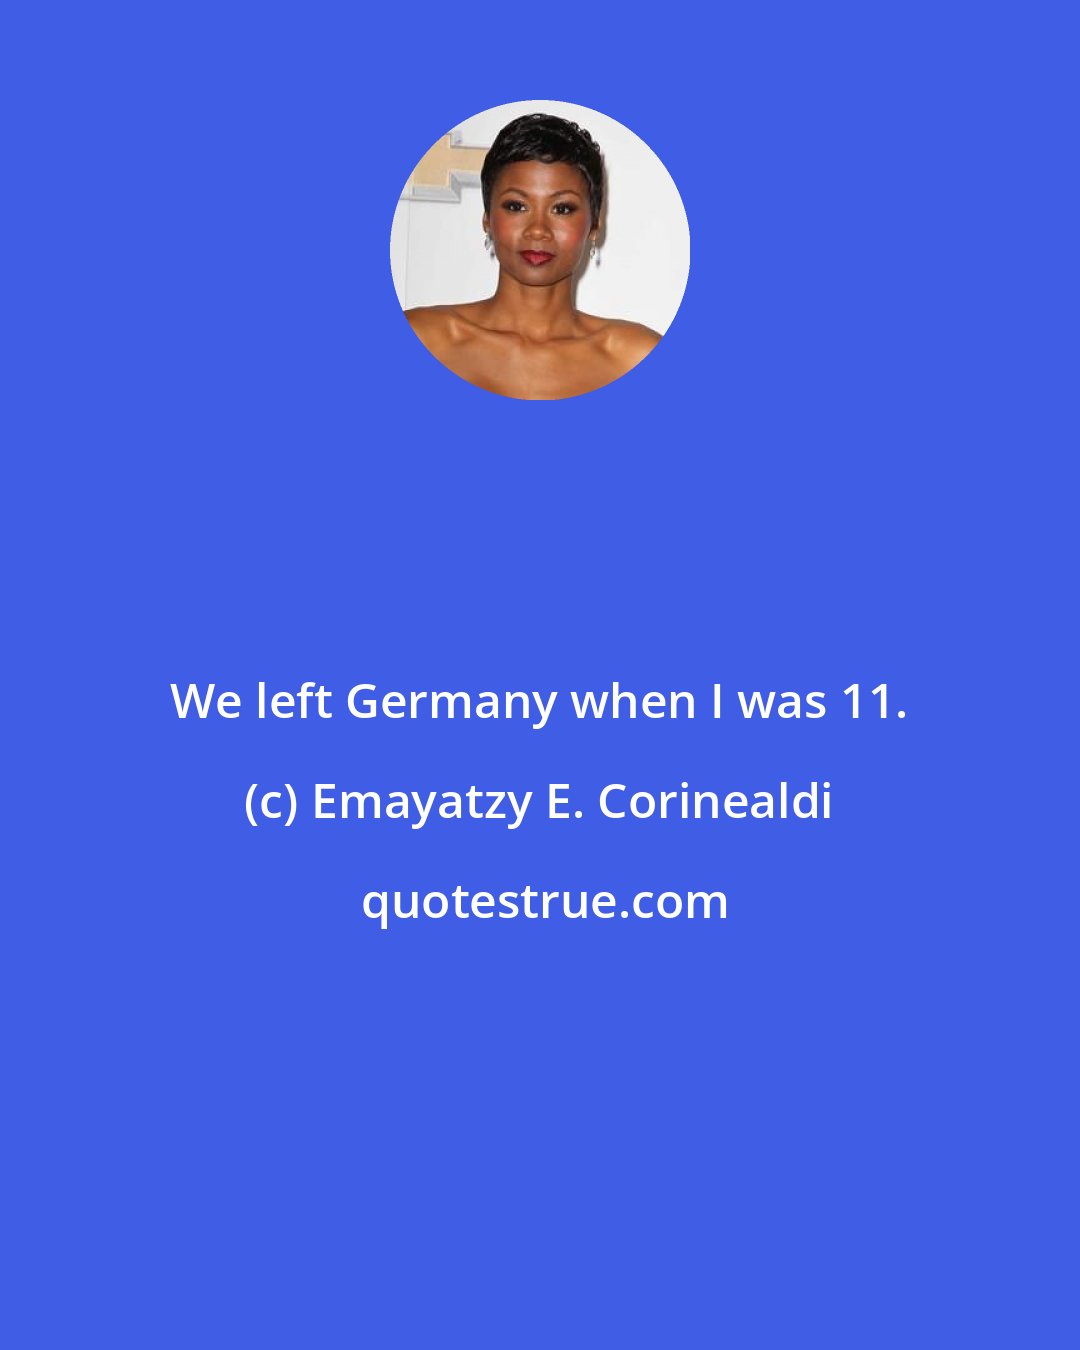 Emayatzy E. Corinealdi: We left Germany when I was 11.